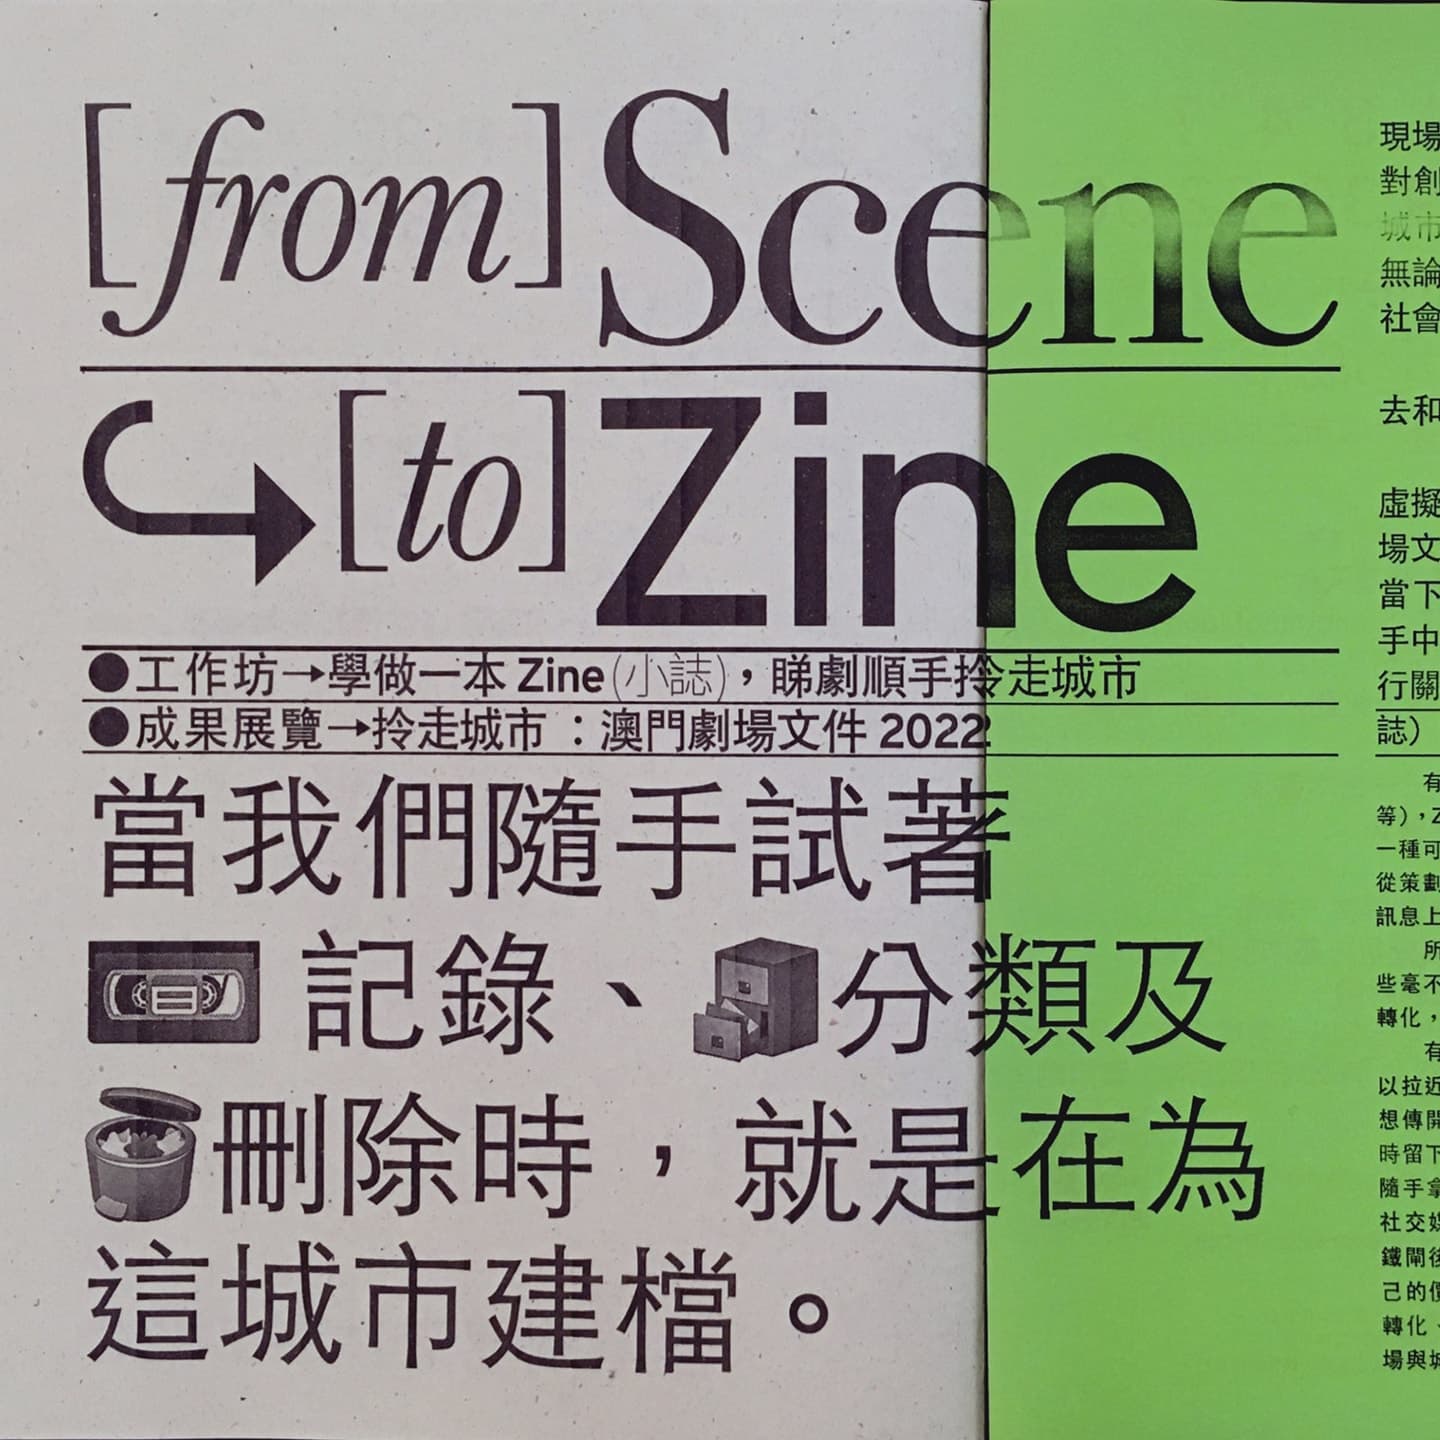 Zine exhibition and theatre document, design by SomethingMoon Design